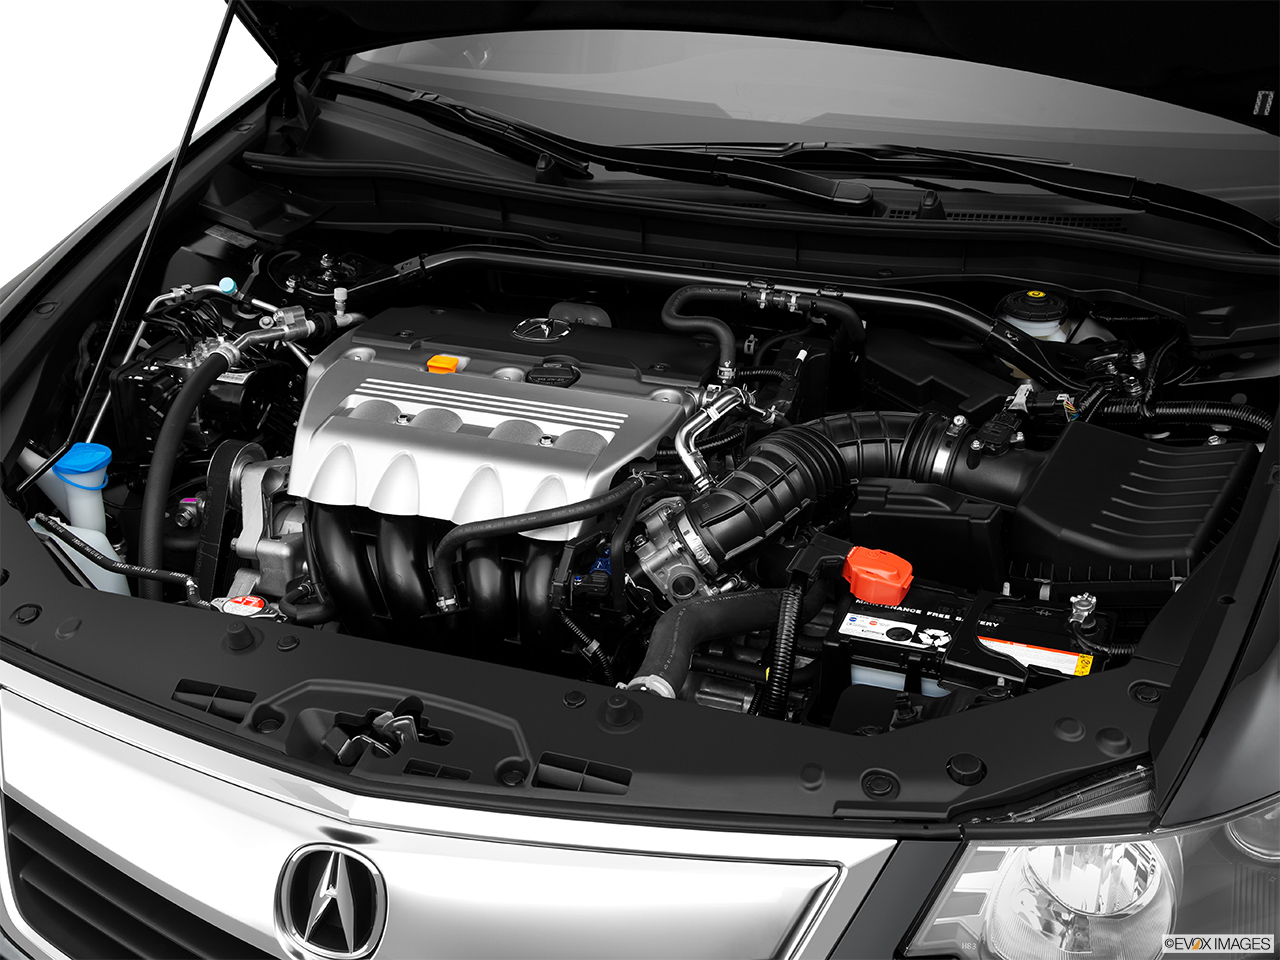 2014 Acura TSX 5-speed Automatic Engine. 